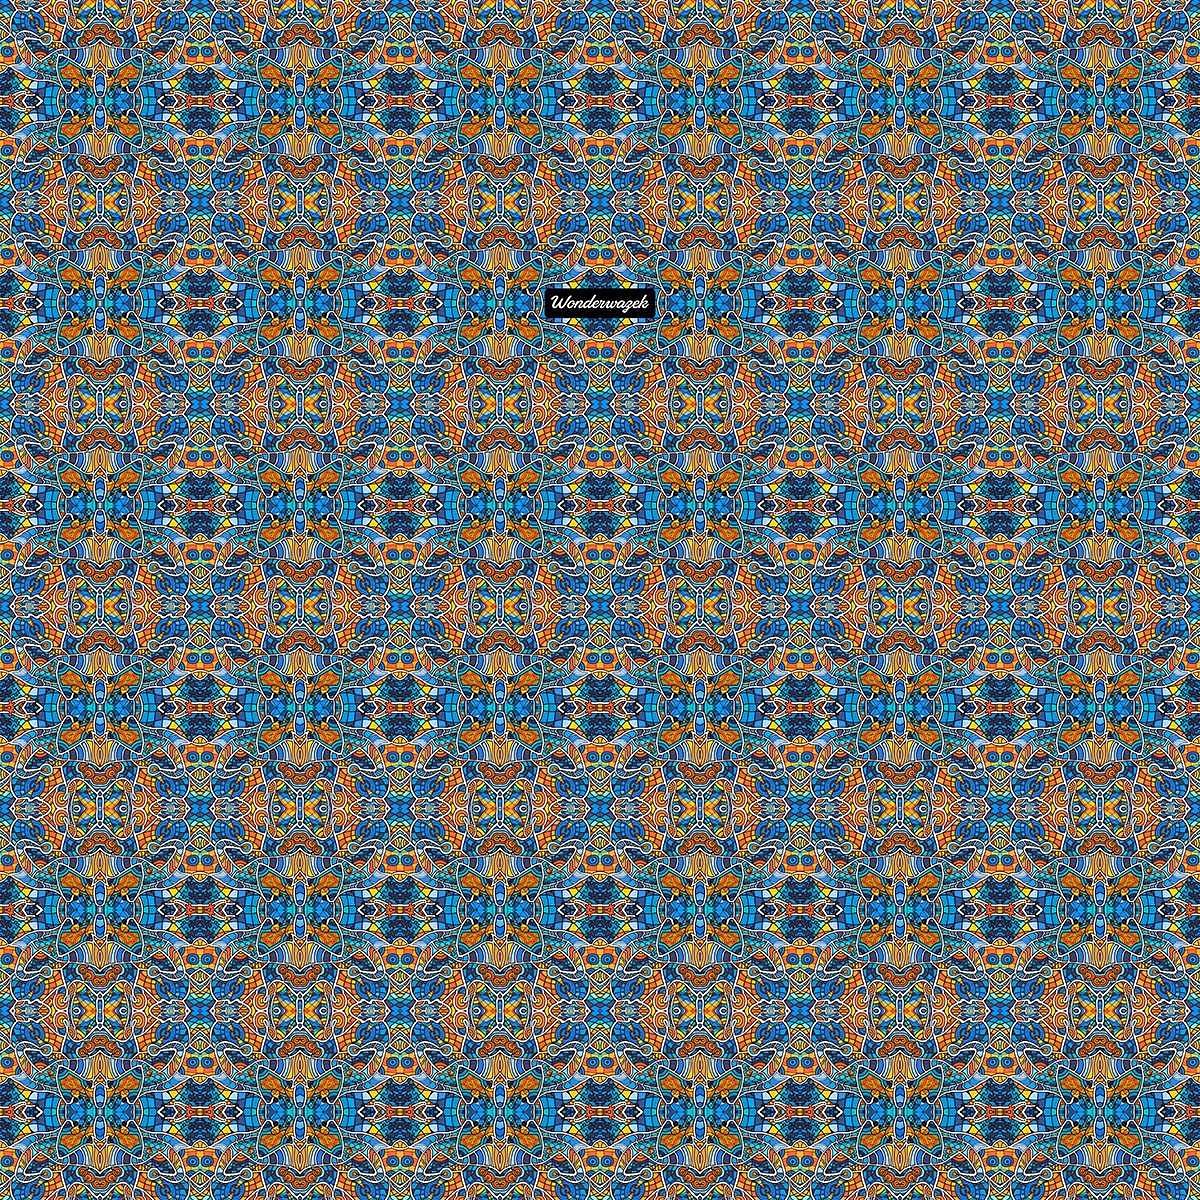 Badetuch • Blankas Blumen – Variation 1, blau, gelb, orange - Wonderwazek